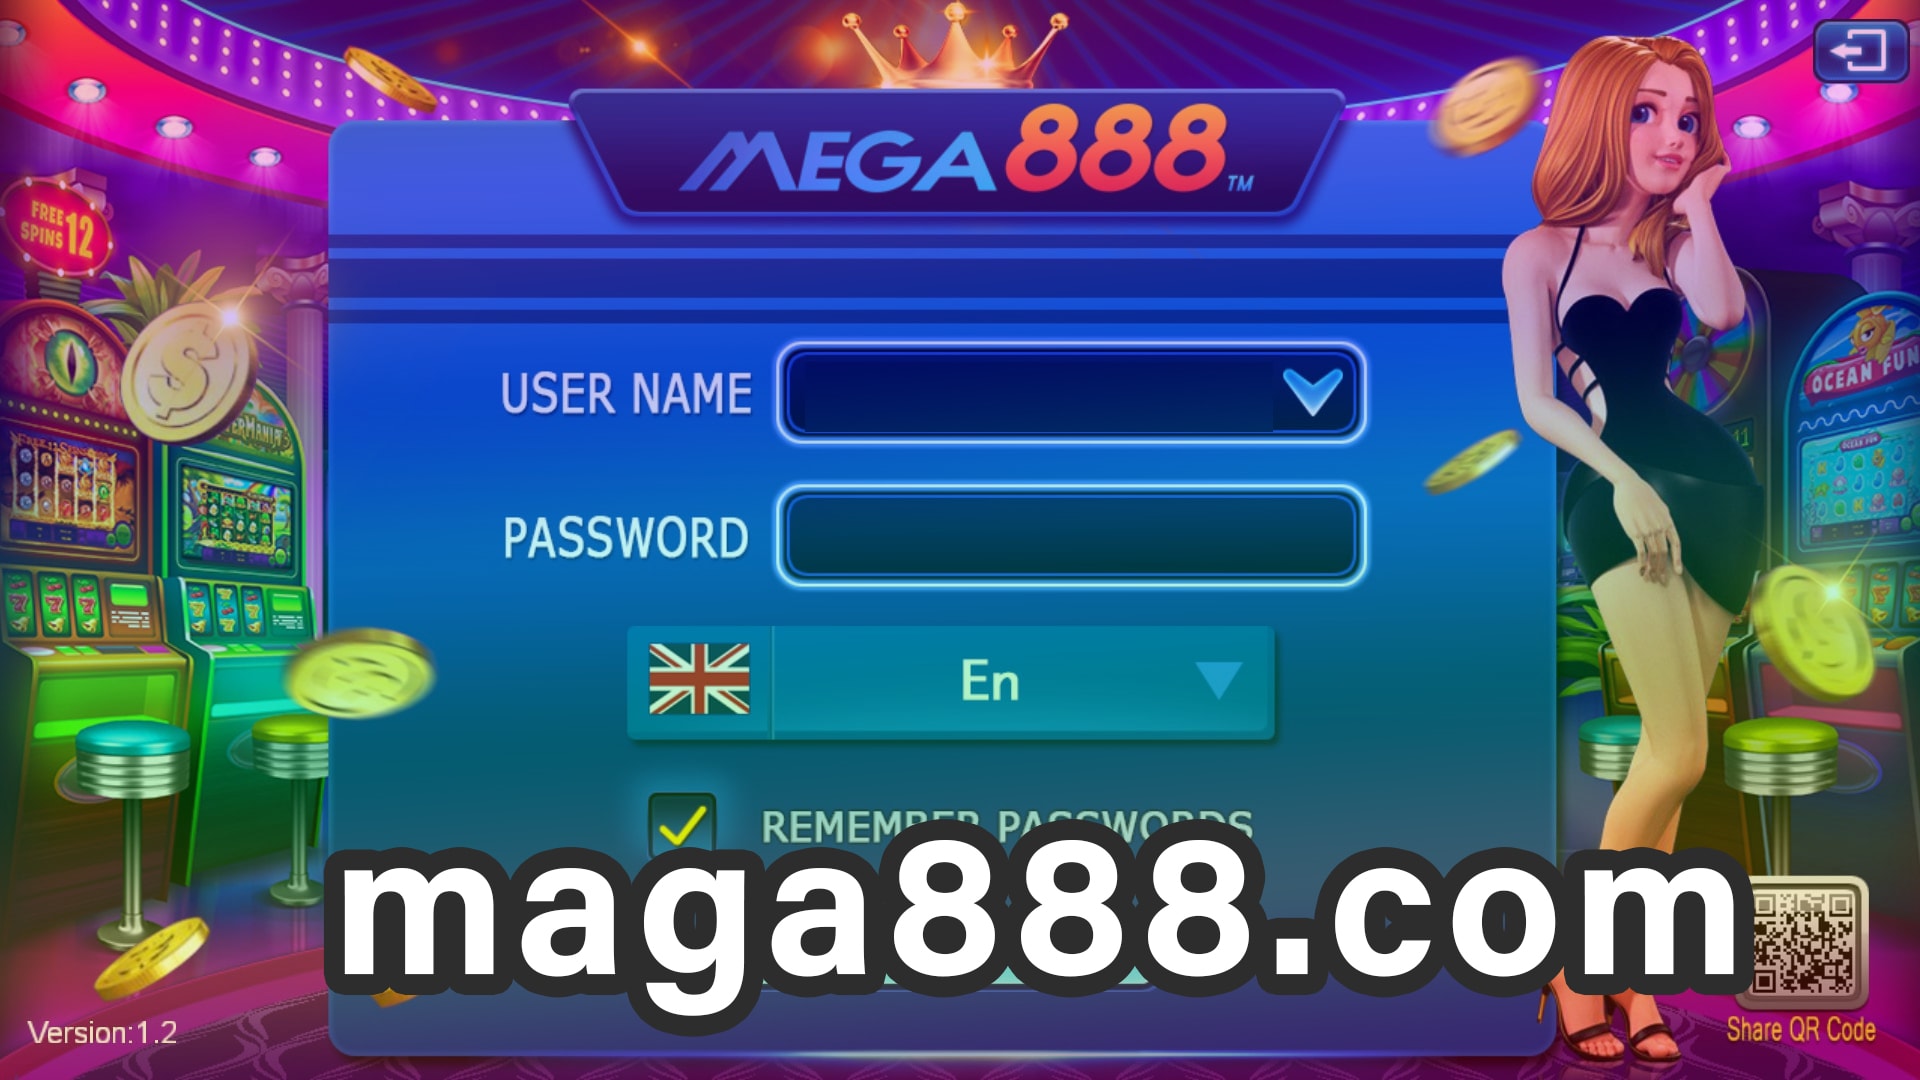 K.mega888 login